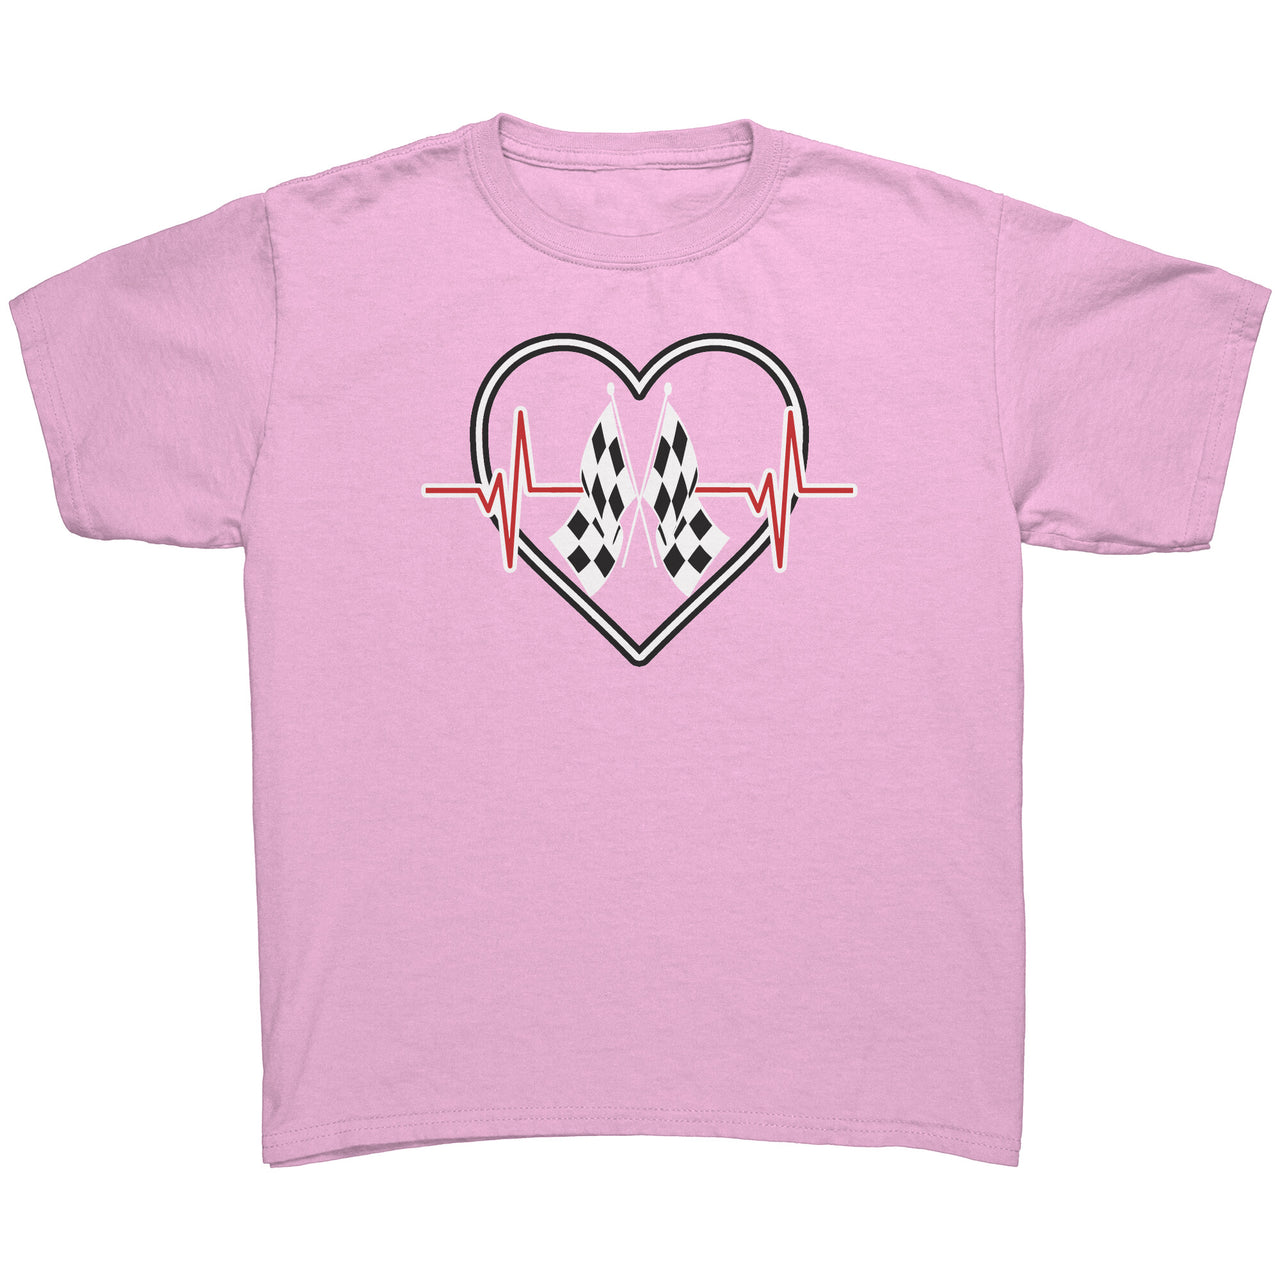 Racing Heartbeat Youth T-shirts/Hoodies